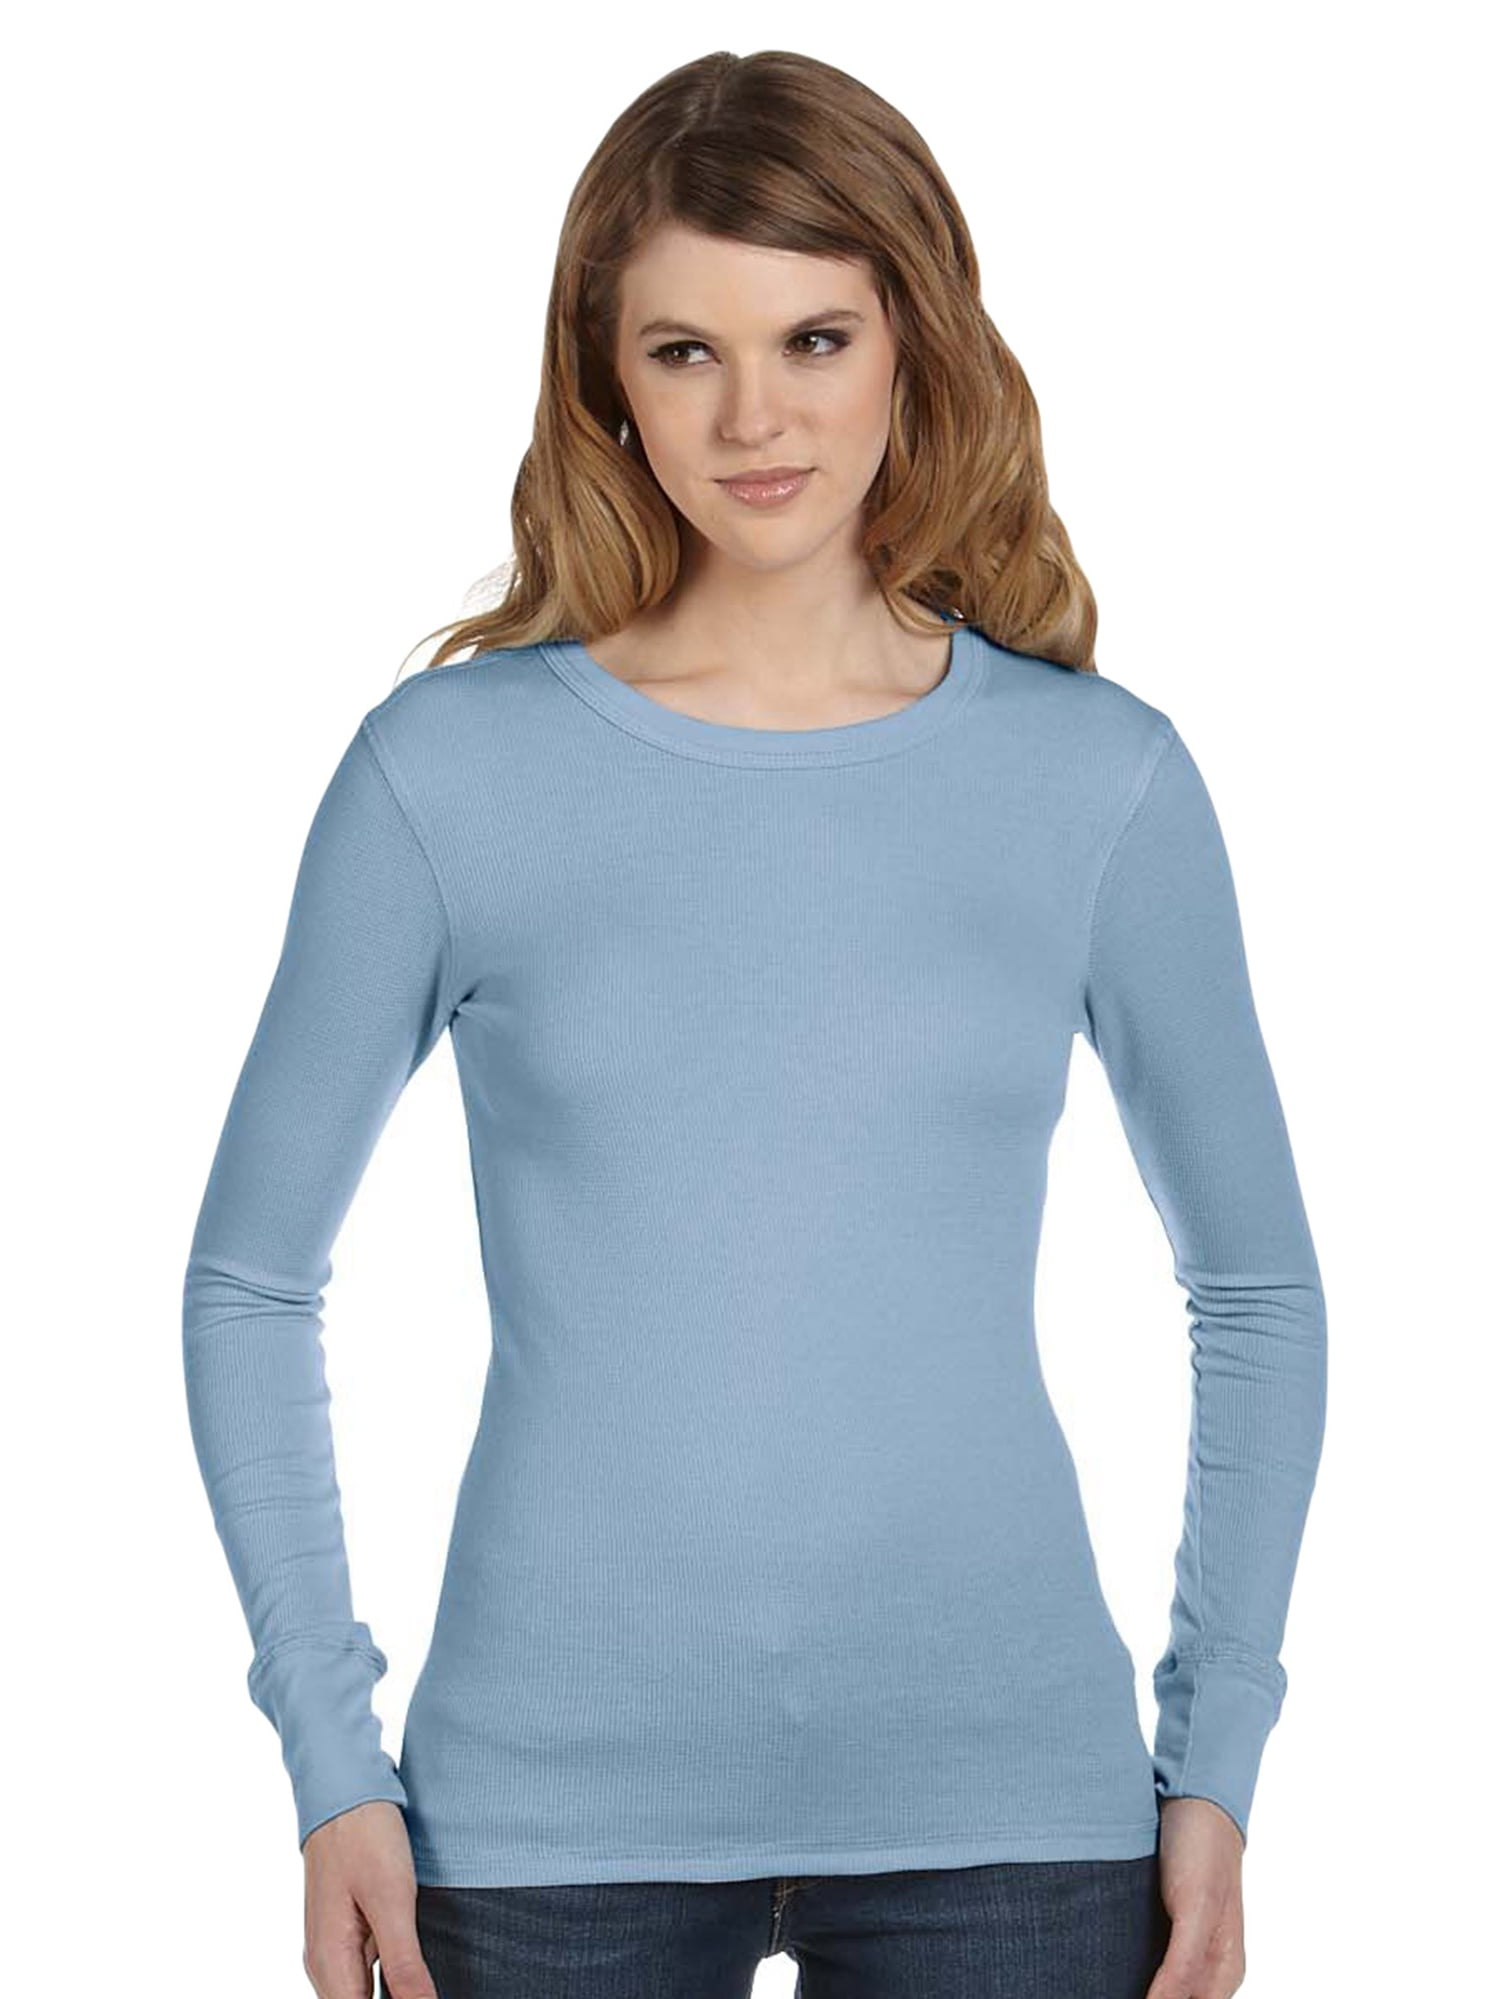 Bella Womens Long Sleeve Thermal T-Shirt